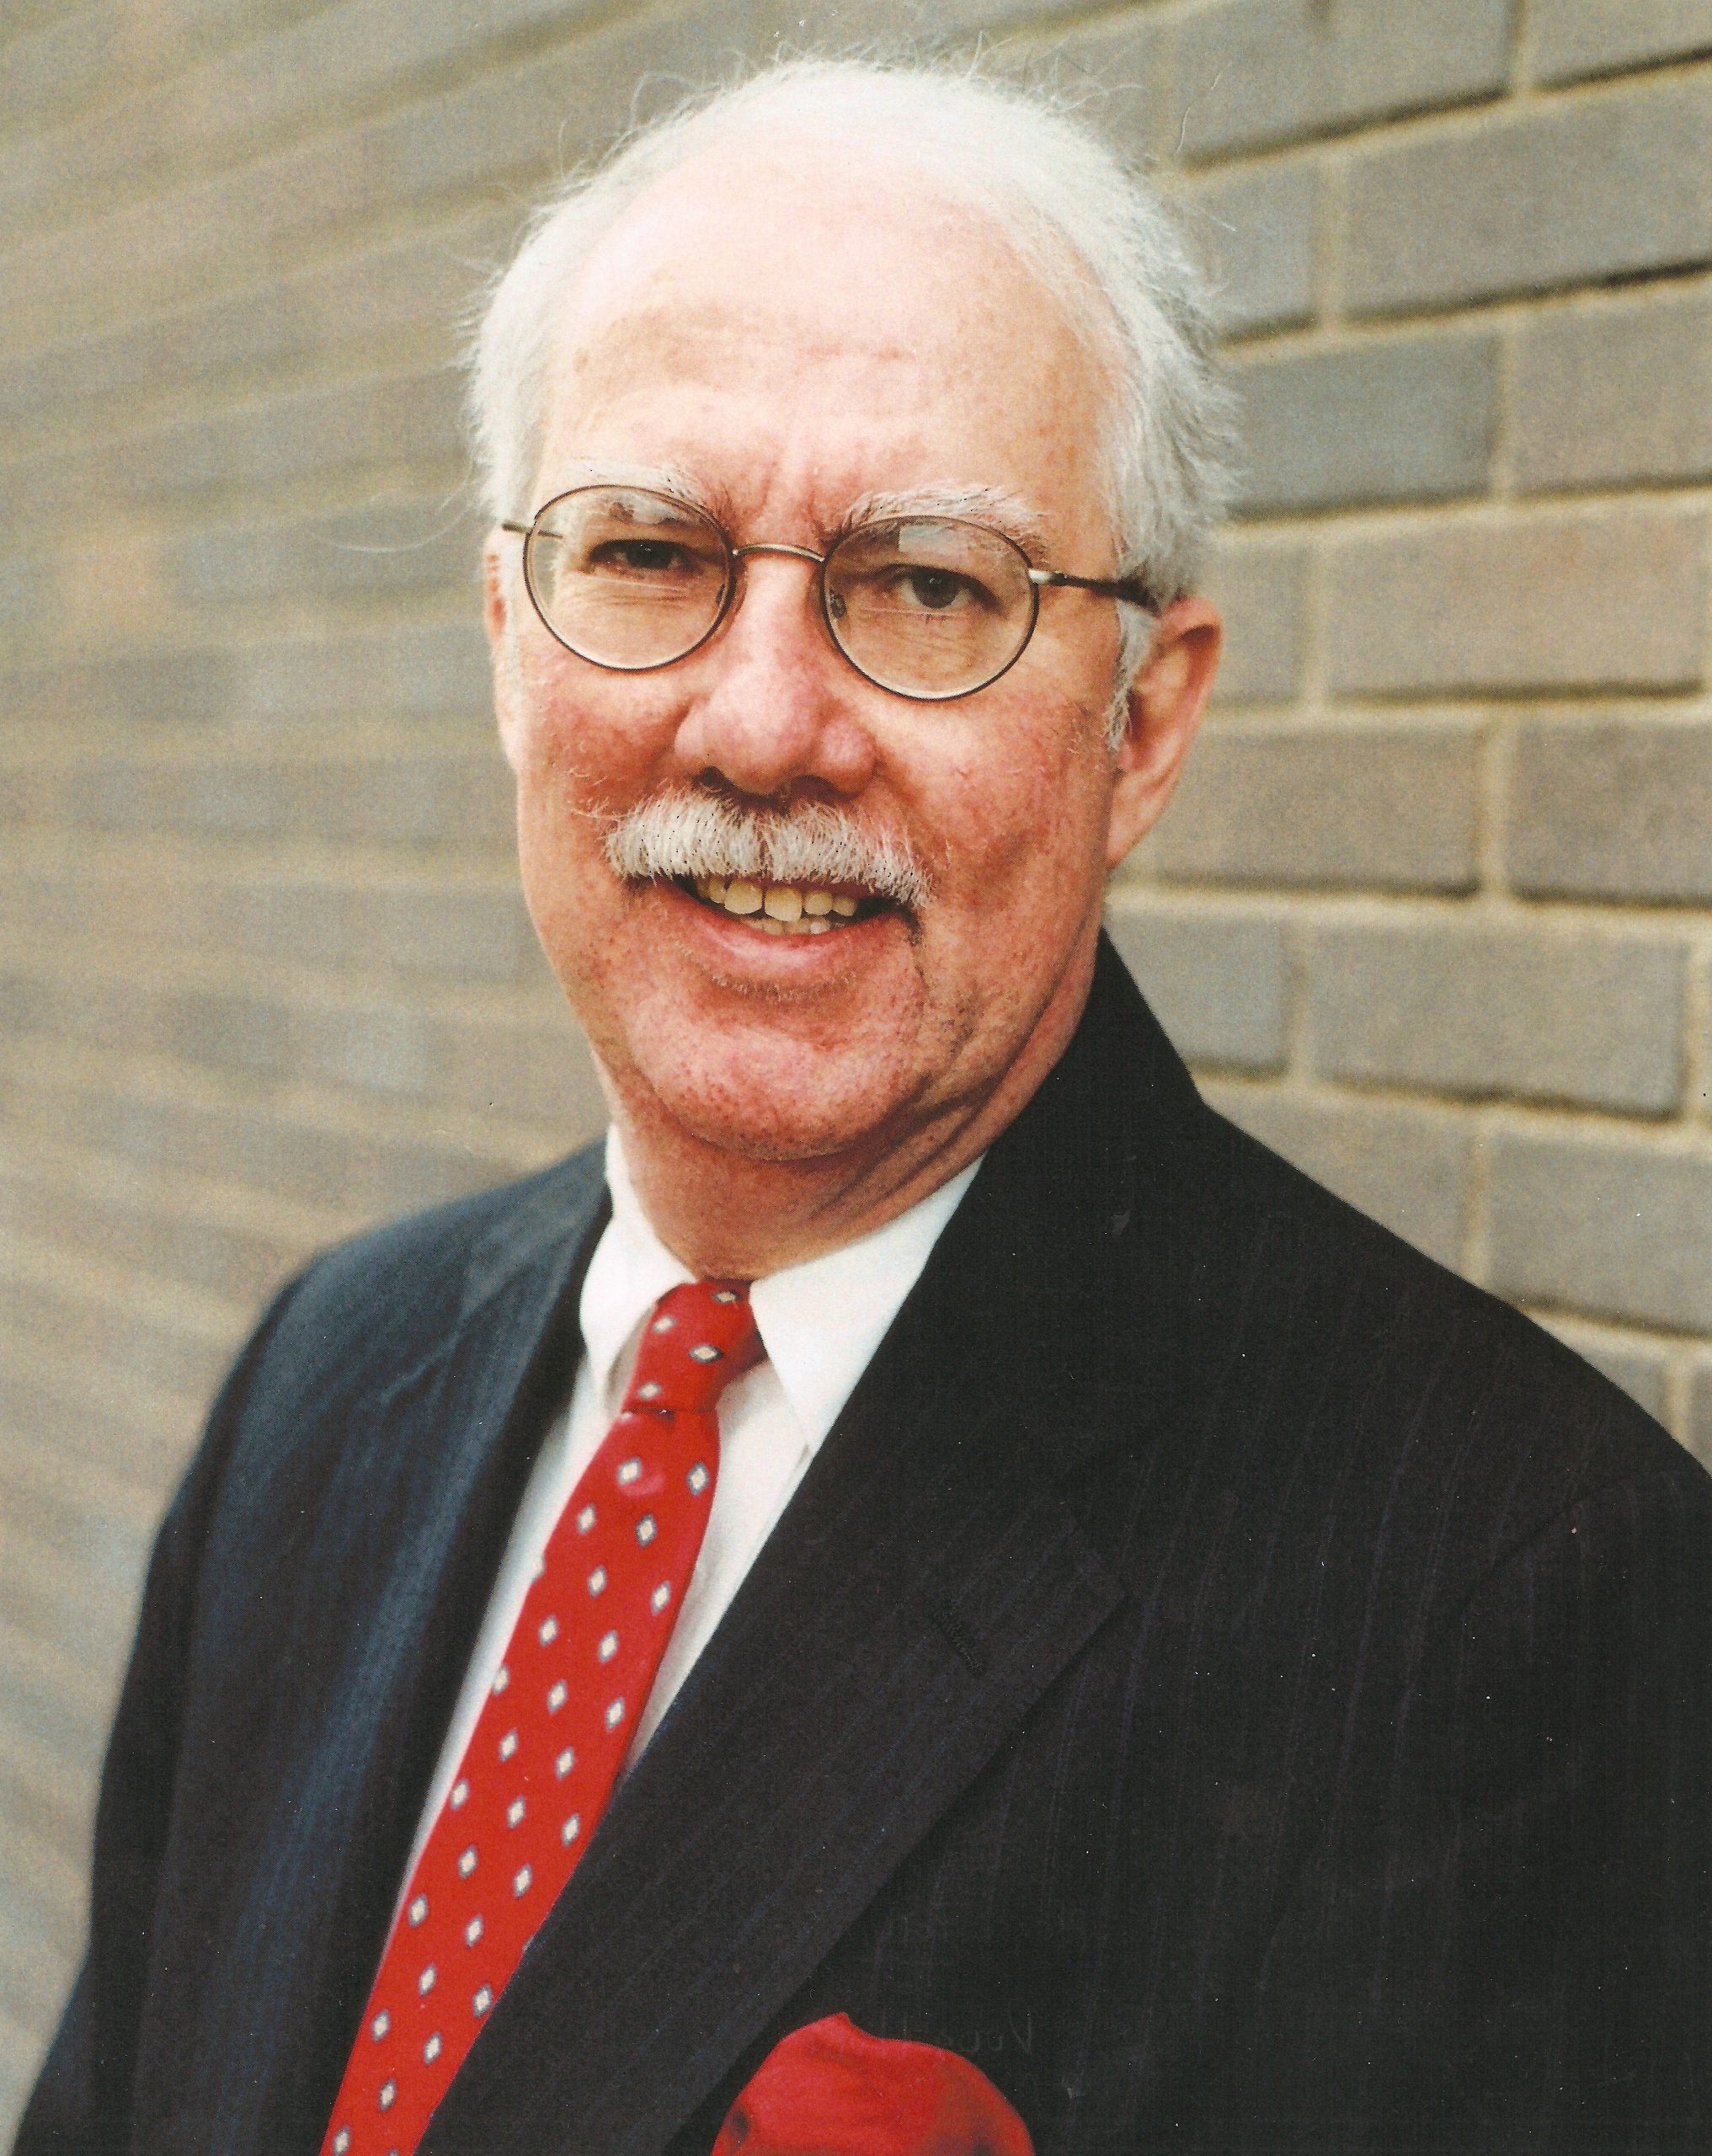 R. Douglas Huff